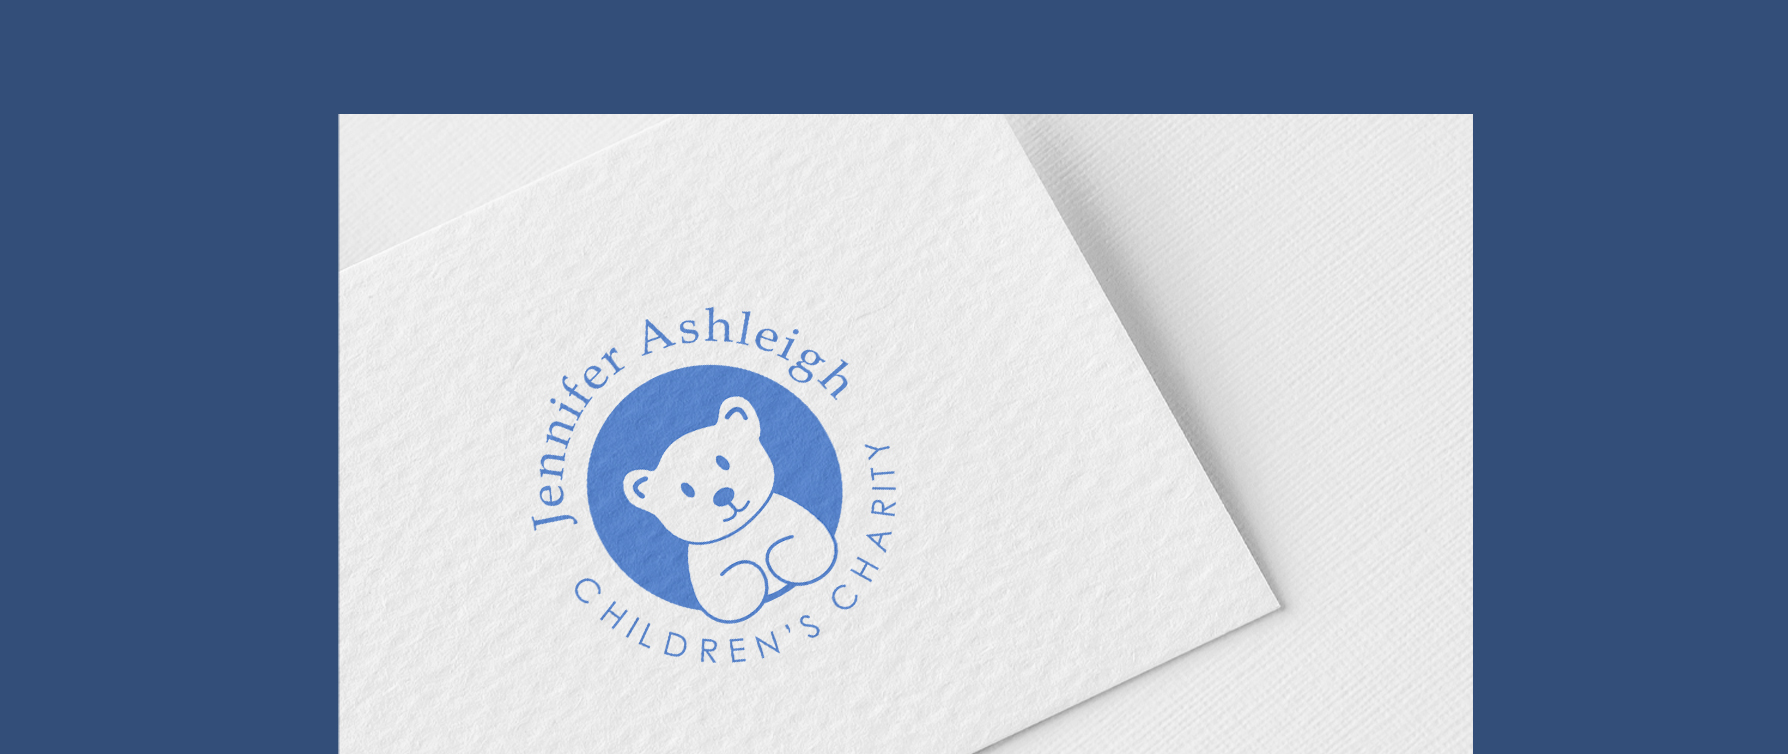 Jennifer Ashleigh Children's Charity main logo